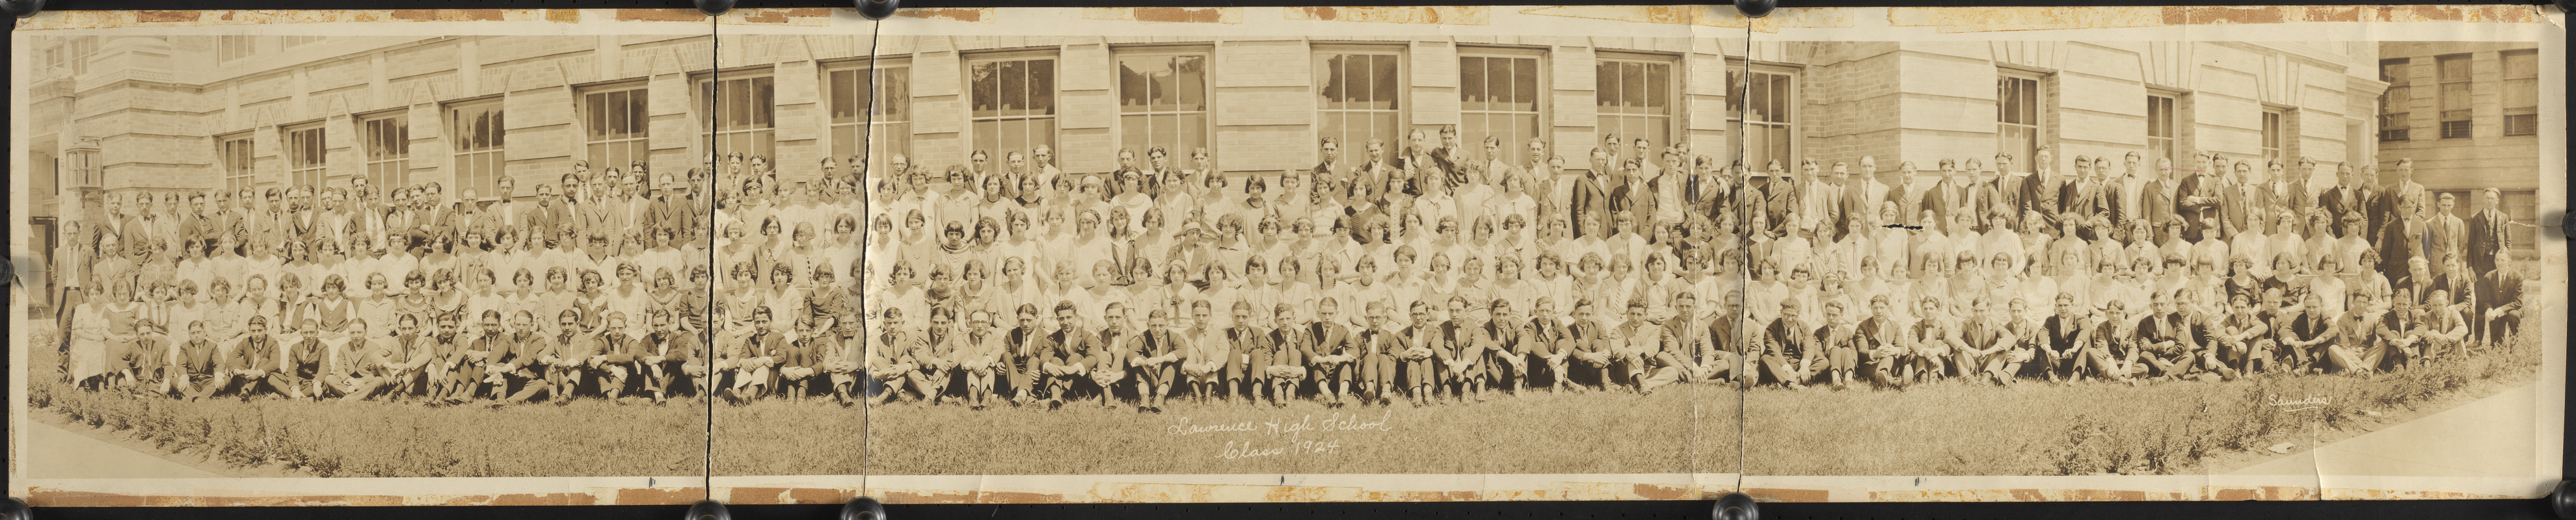 Lawrence High School, class 1924